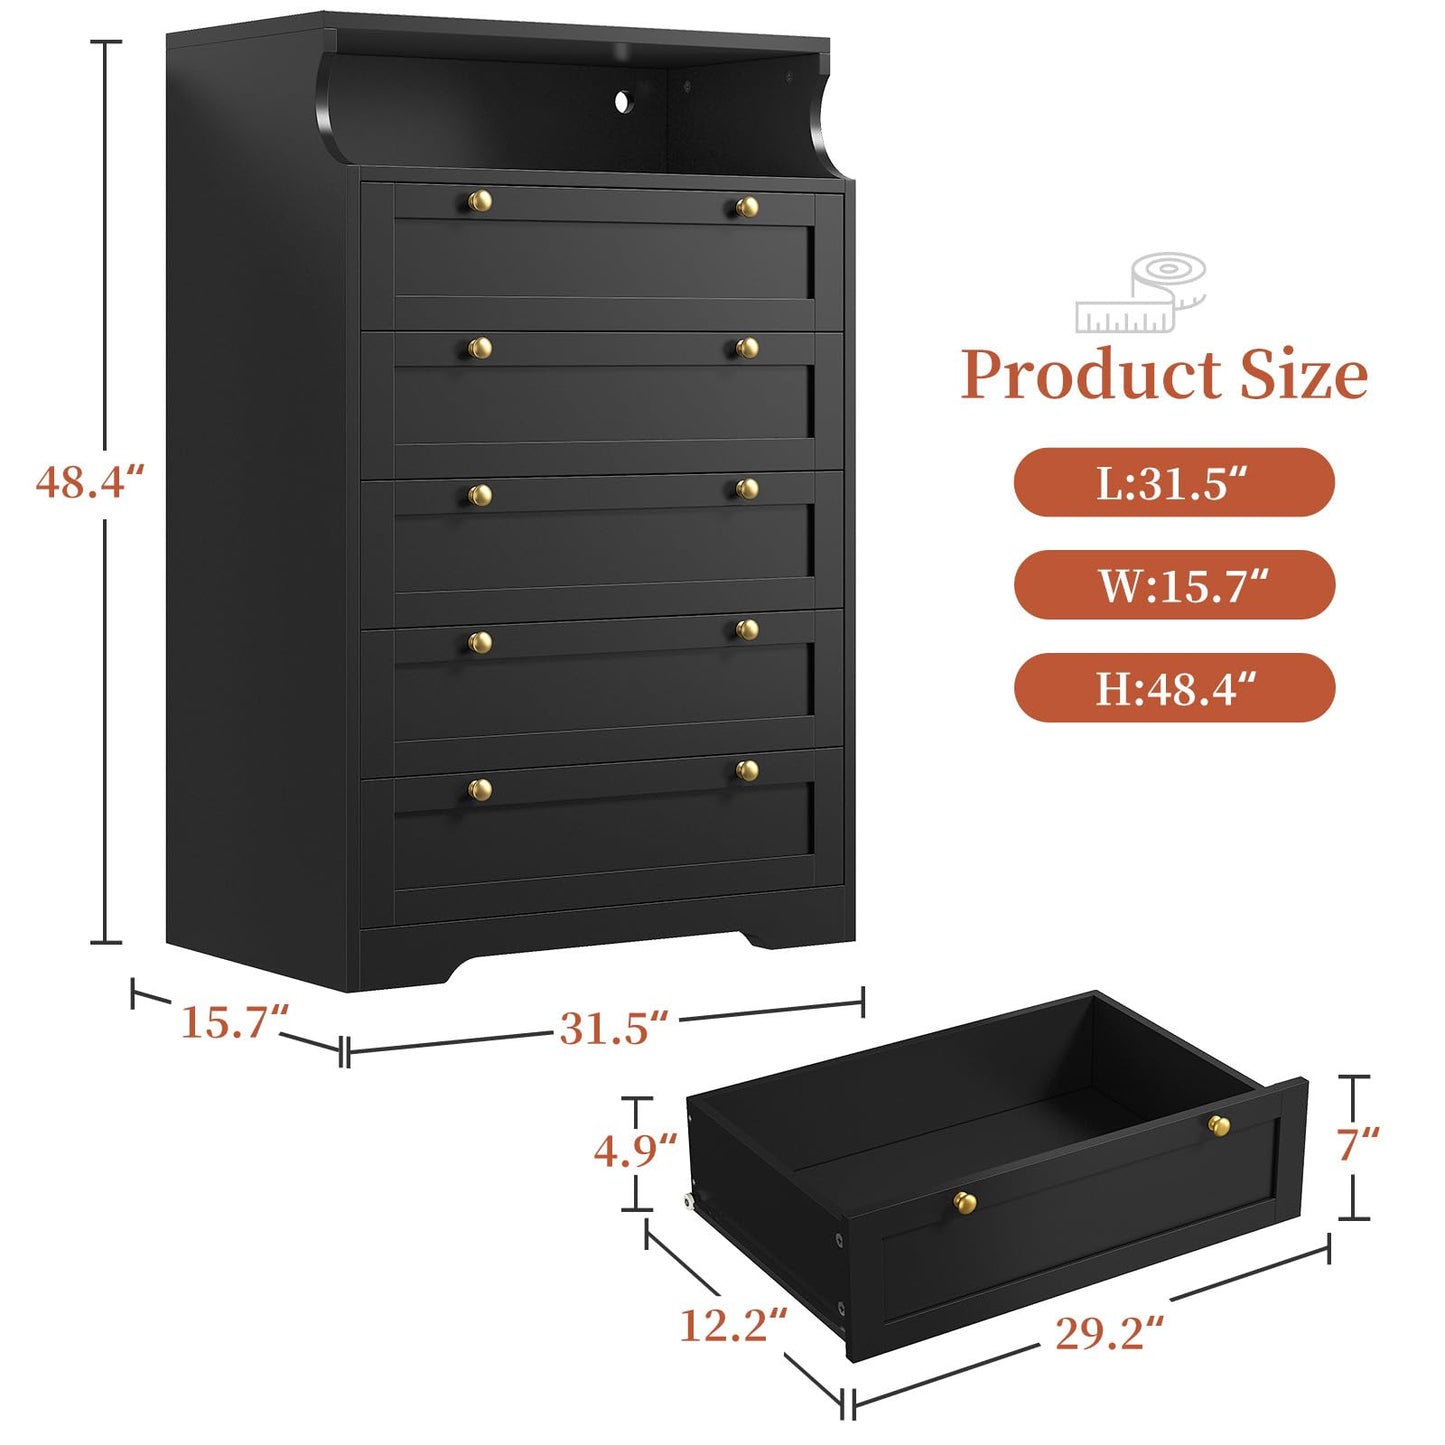 Hana Exports Dresser, Black Dresser for Bedroom, Black Dresser with LED, Bedroom Dressers & Chests of Drawers, Tall Dresser with 5 Wood Drawers, Dressers for Bedroom with Metal Handles 48.4" H